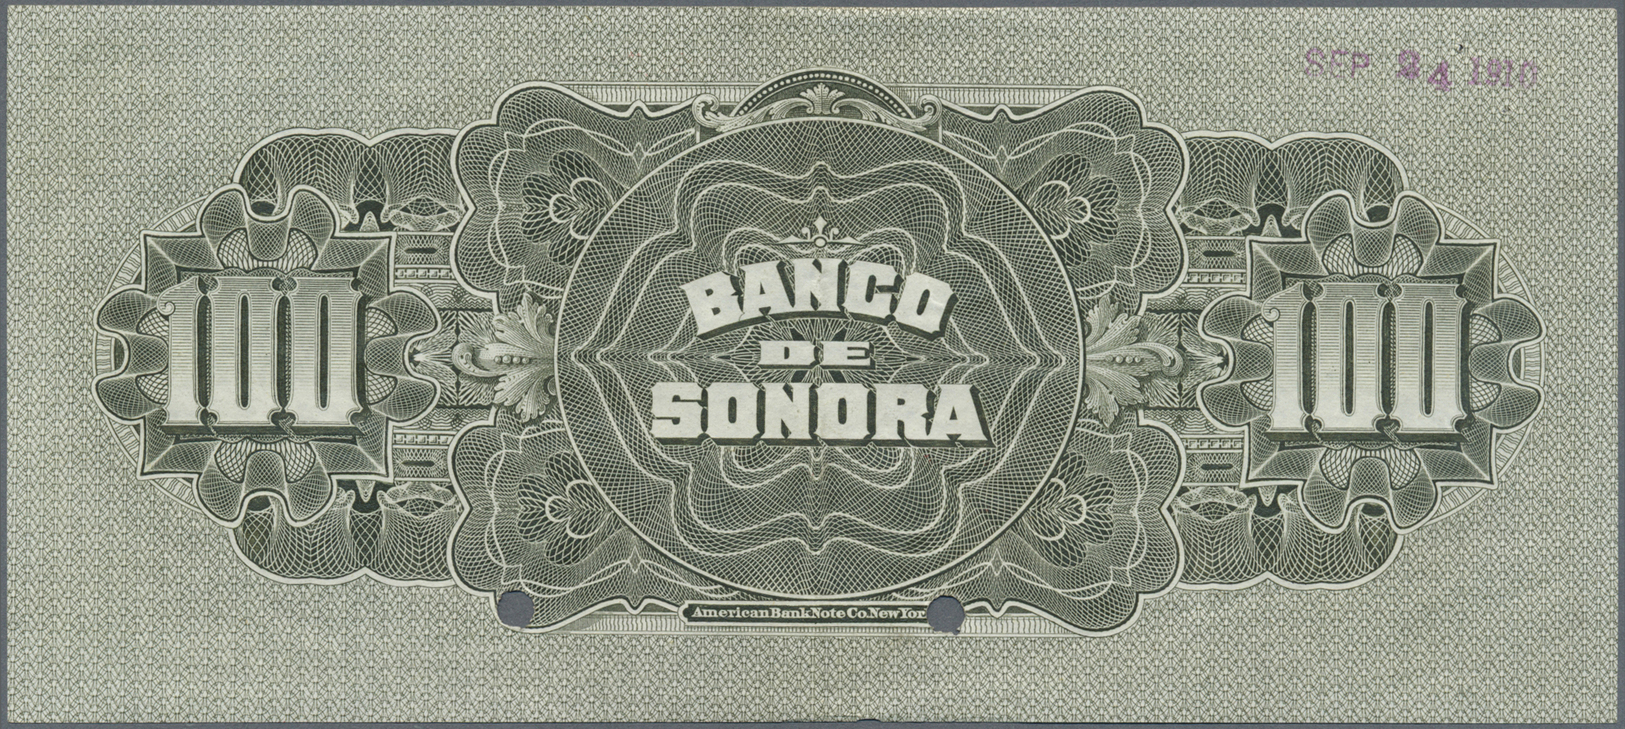 01717 Mexico: El Banco De Sonora 100 Pesos 1911 SPECIMEN, P.S423s, Punch Hole Cancellation And Red Overprint Specimen At - Mexico